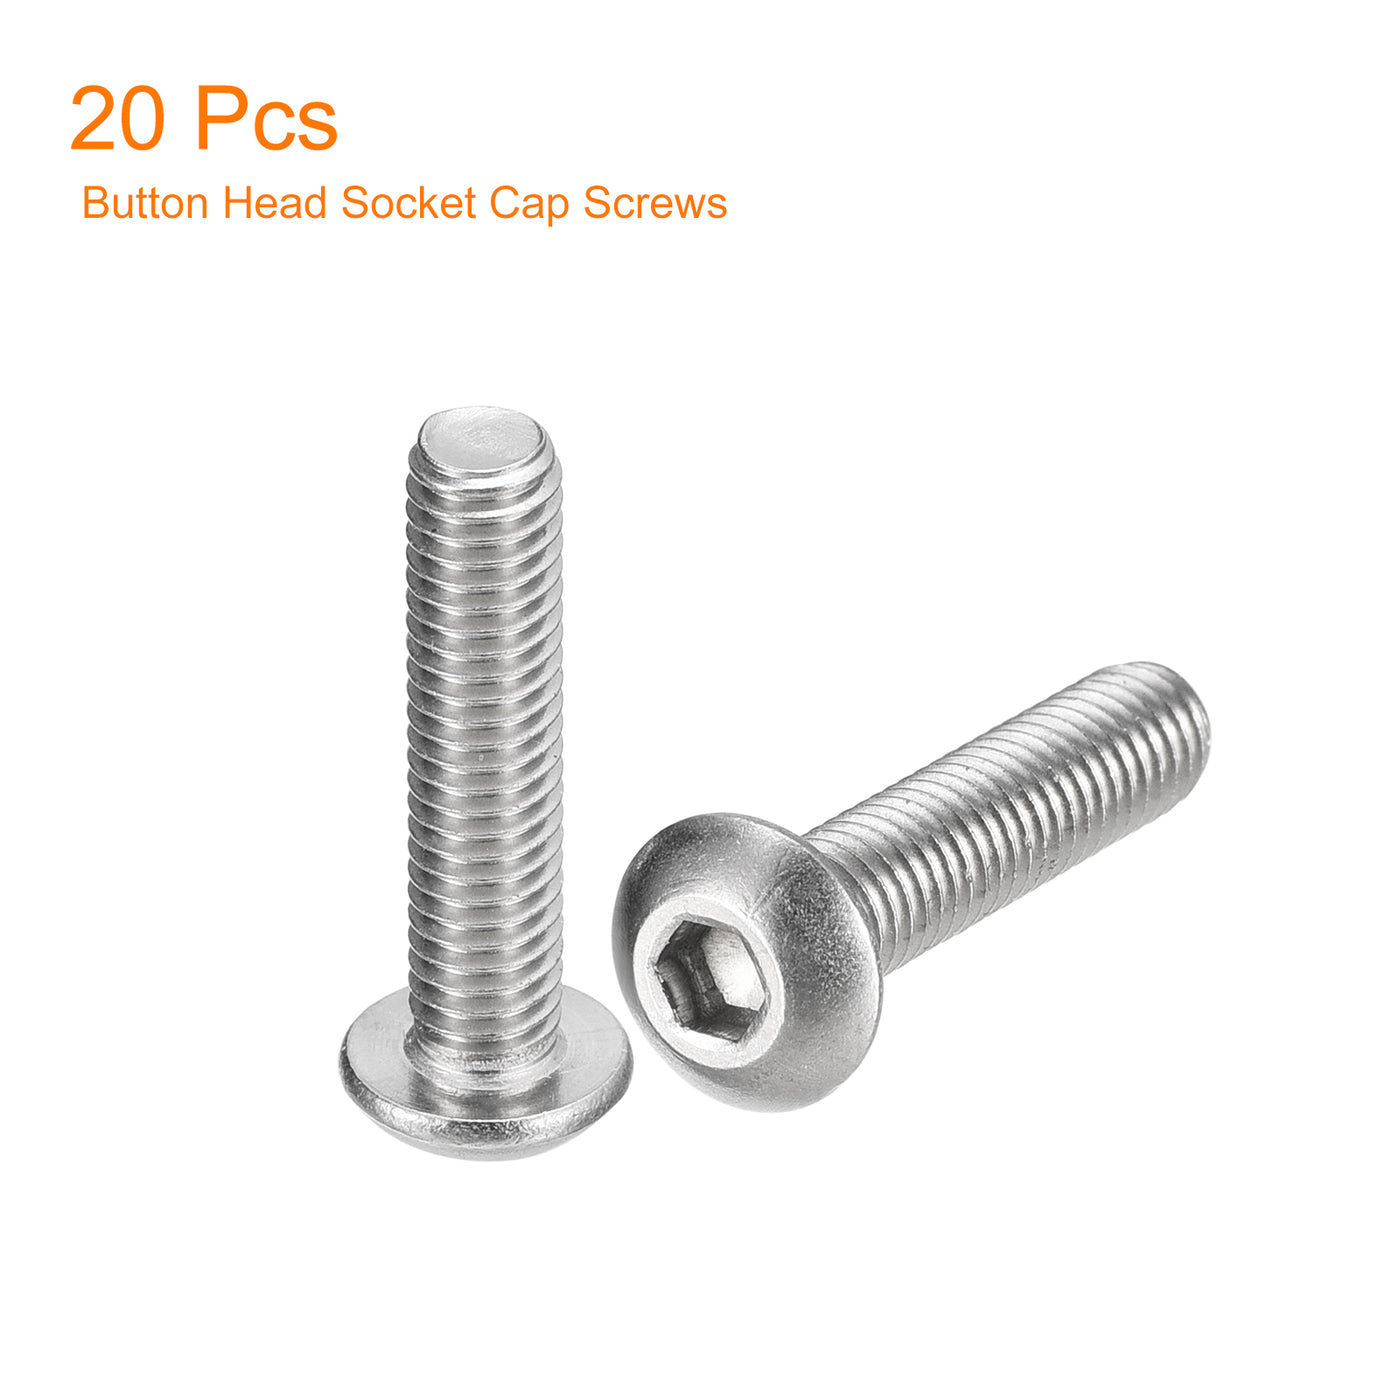 uxcell Uxcell #10-32x7/8" Button Head Socket Cap Screws, 20pcs 304 Stainless Steel Screws